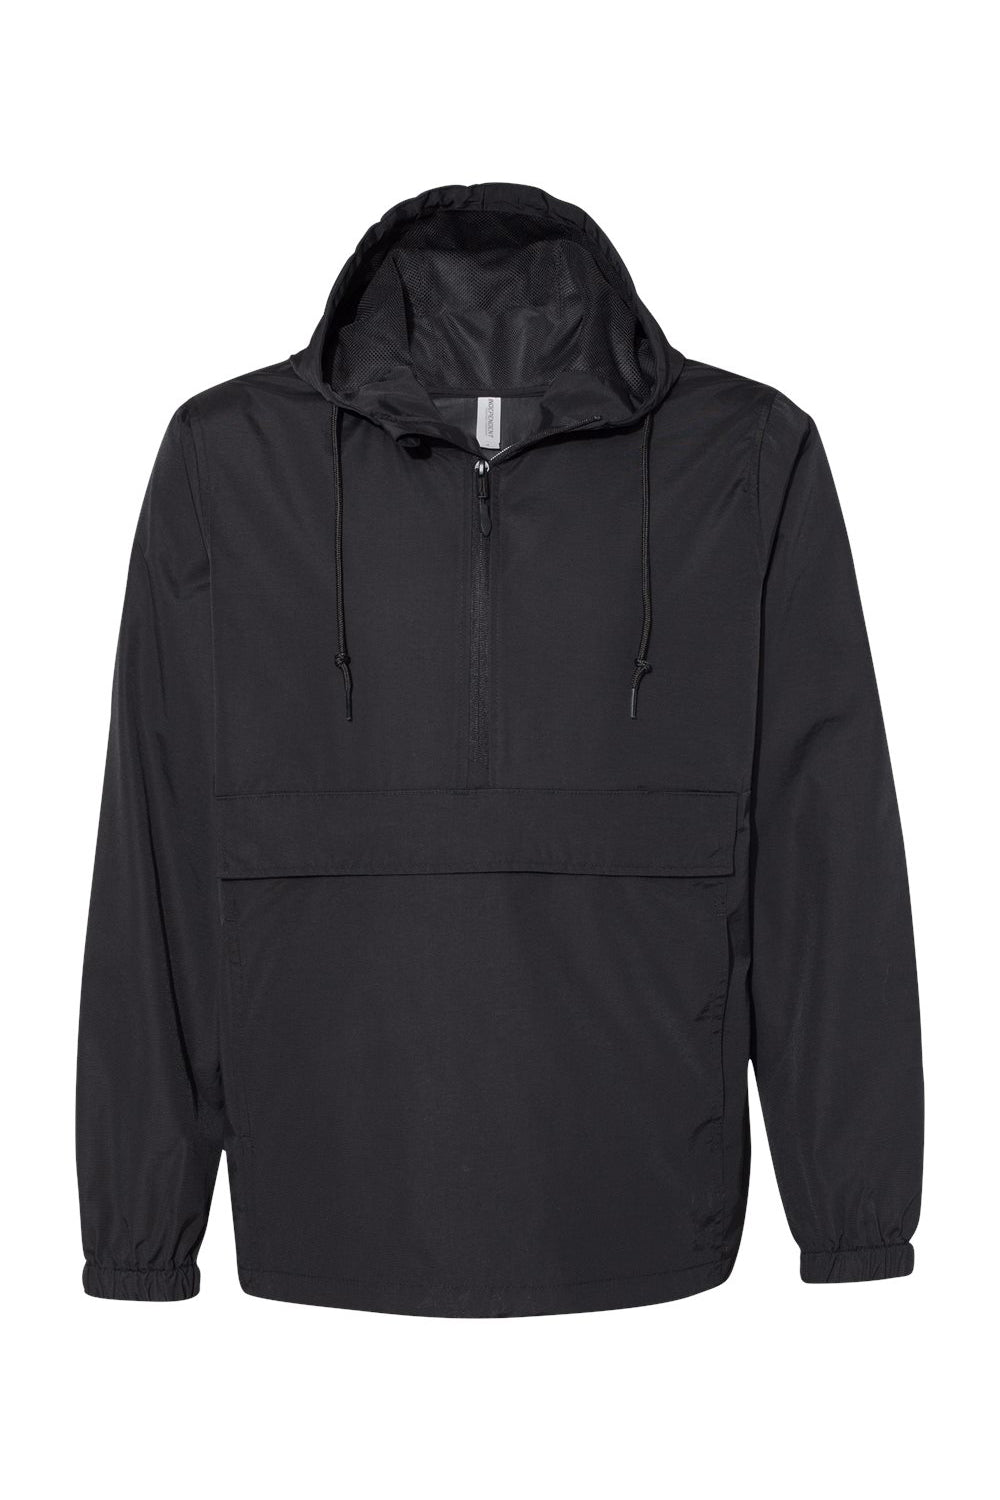 Independent Trading Co. EXP94NAW Mens Nylon Hooded Anorak Jacket Black Flat Front